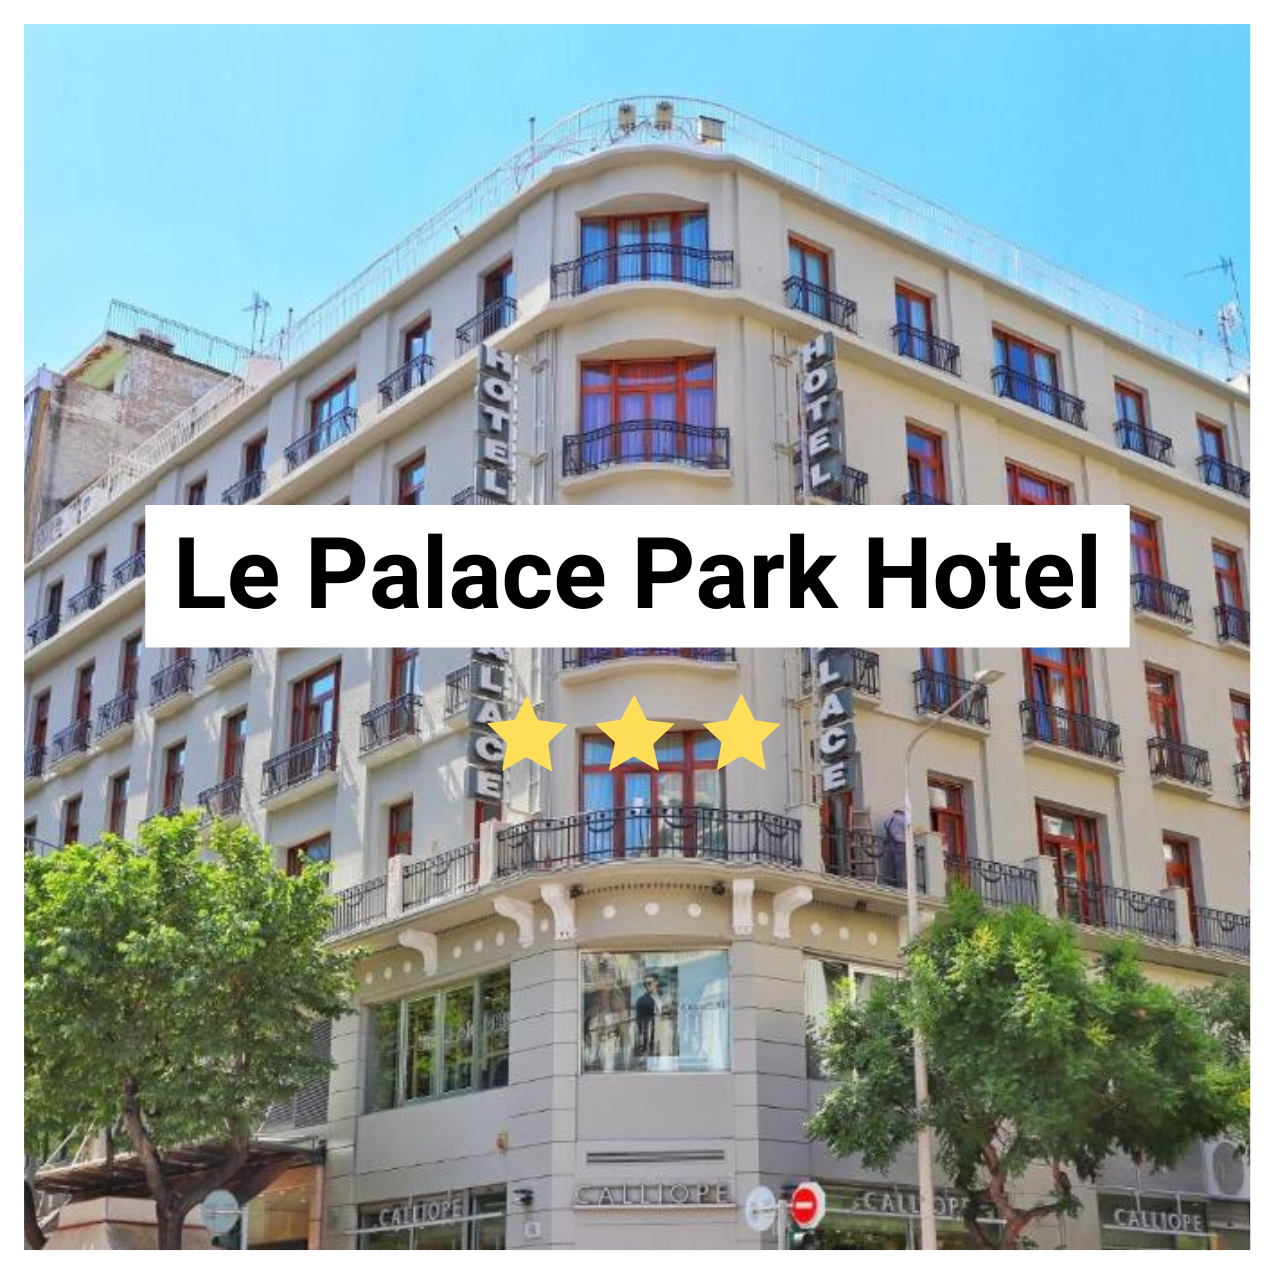 Le Palace Park Hotel Image.